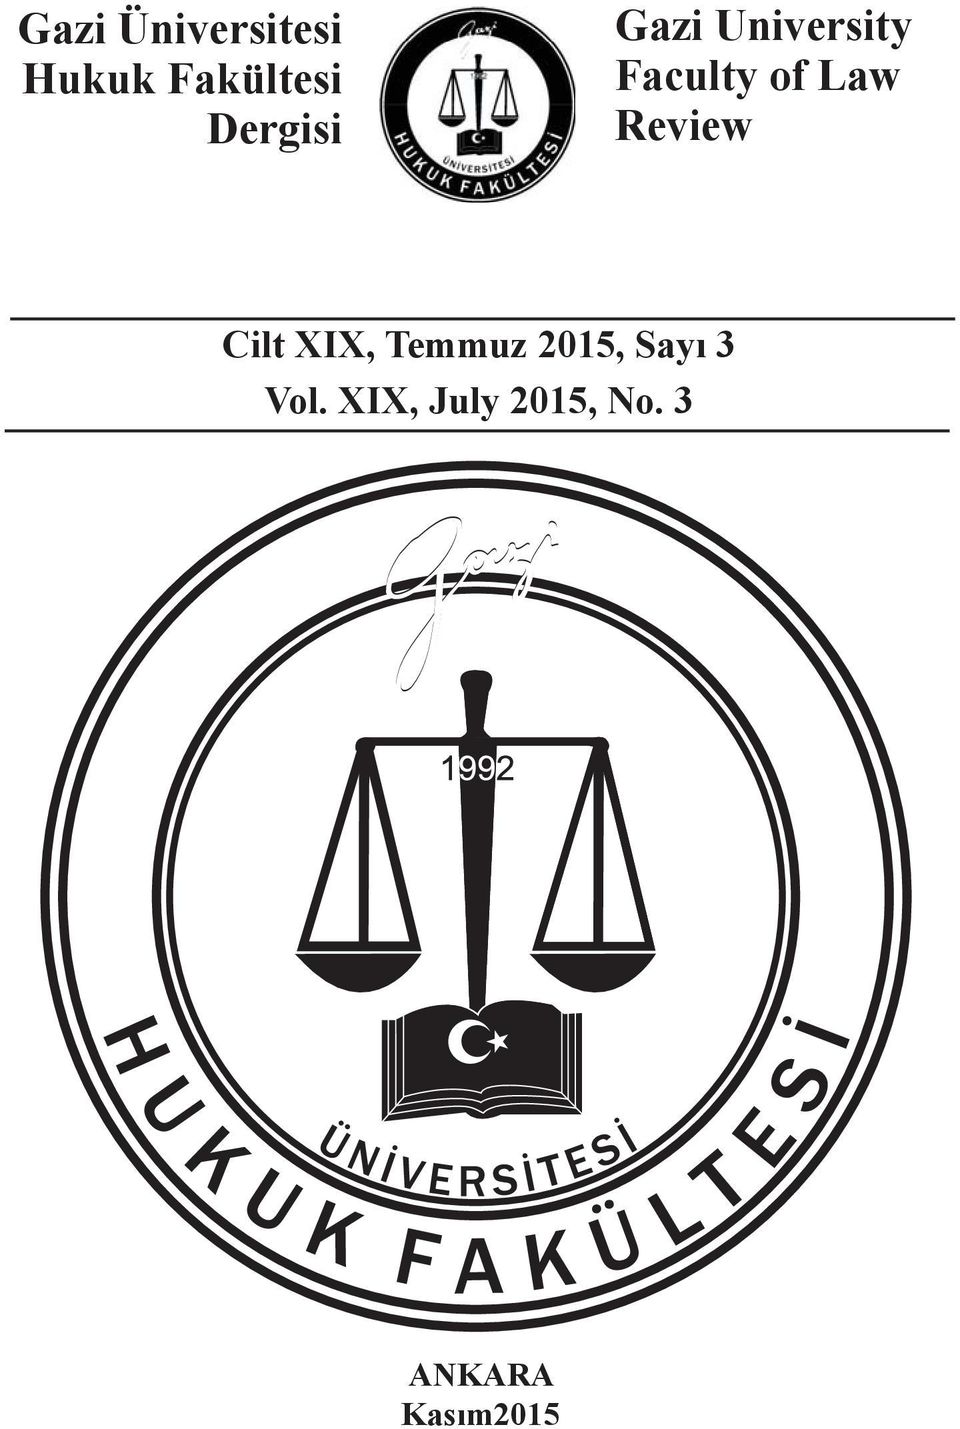 Review Cilt XIX, Temmuz 2015, Sayı 3